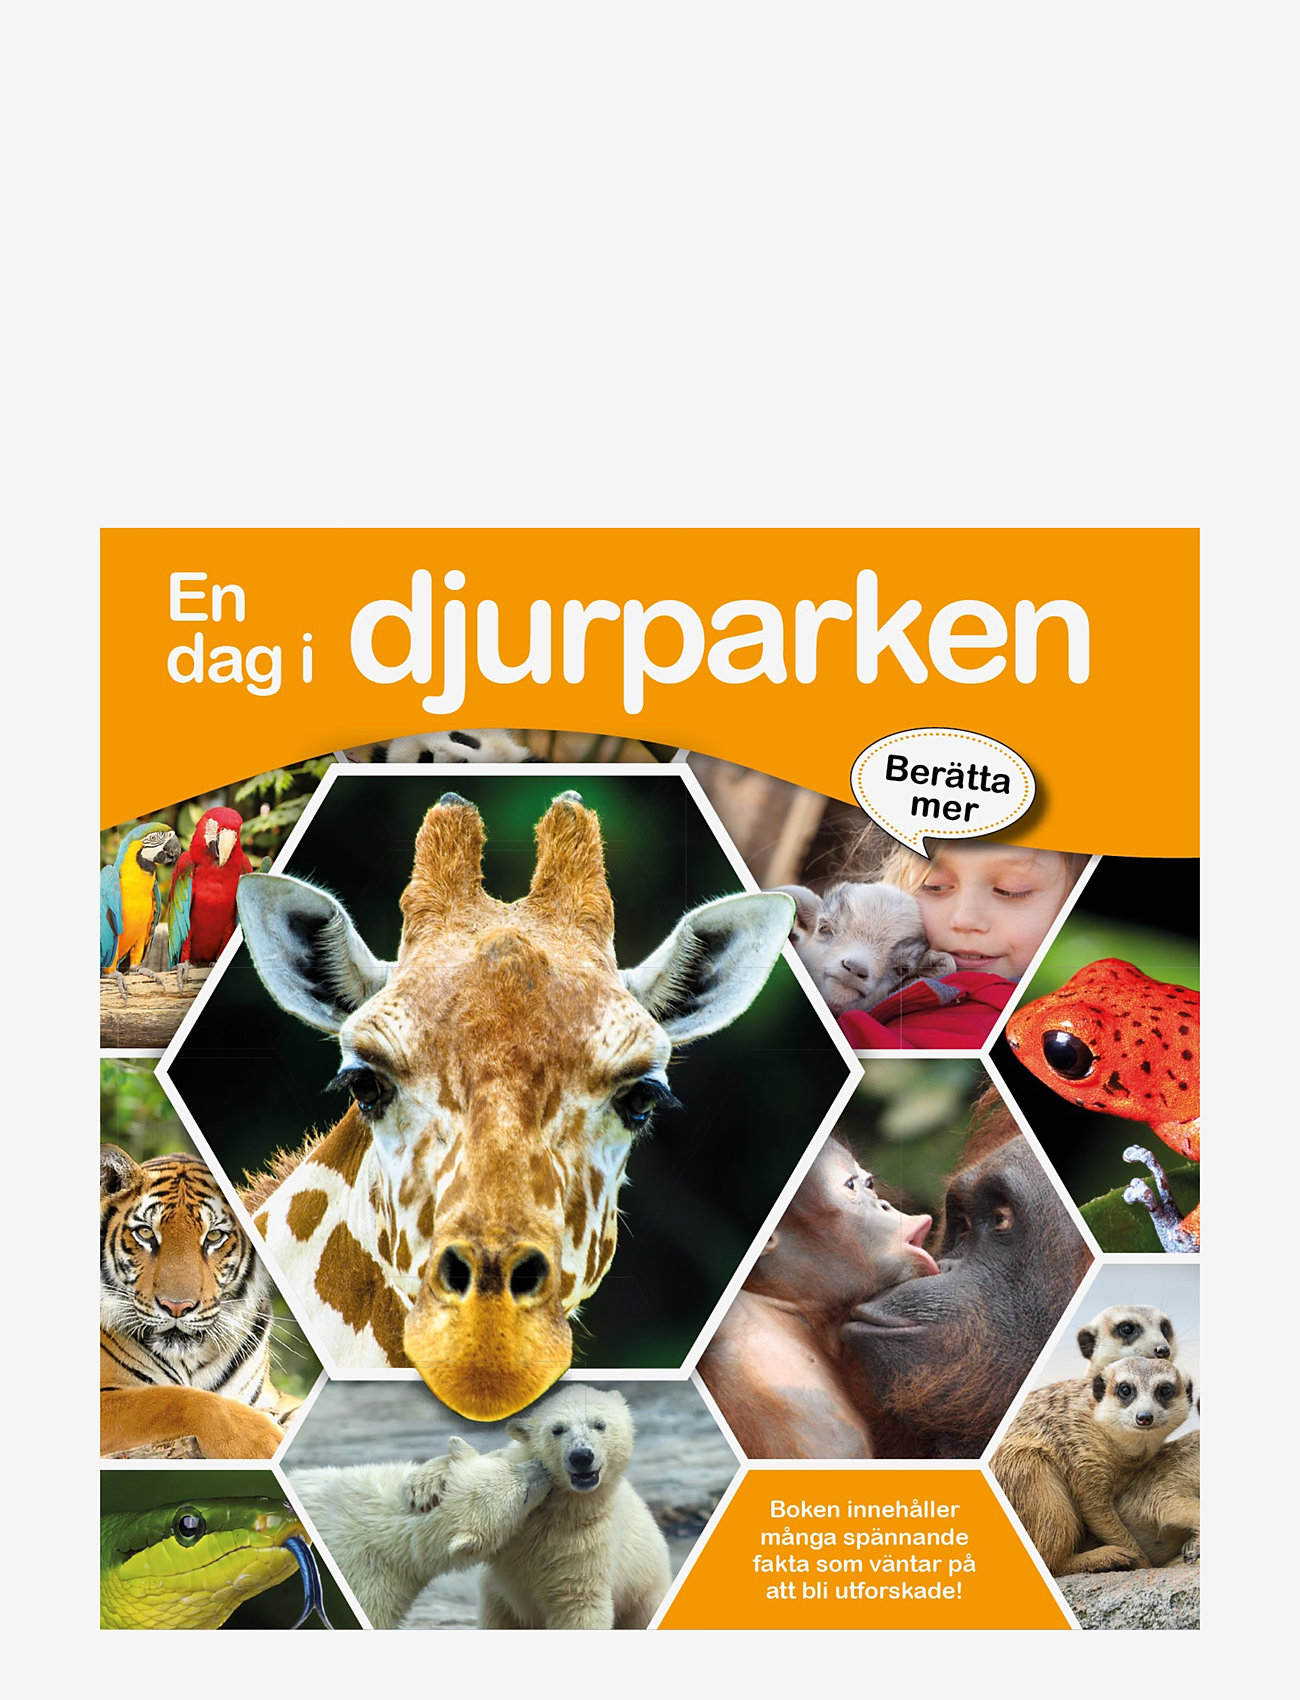 GLOBE - En dag i djurparken - die niedrigsten preise - children's book - 0